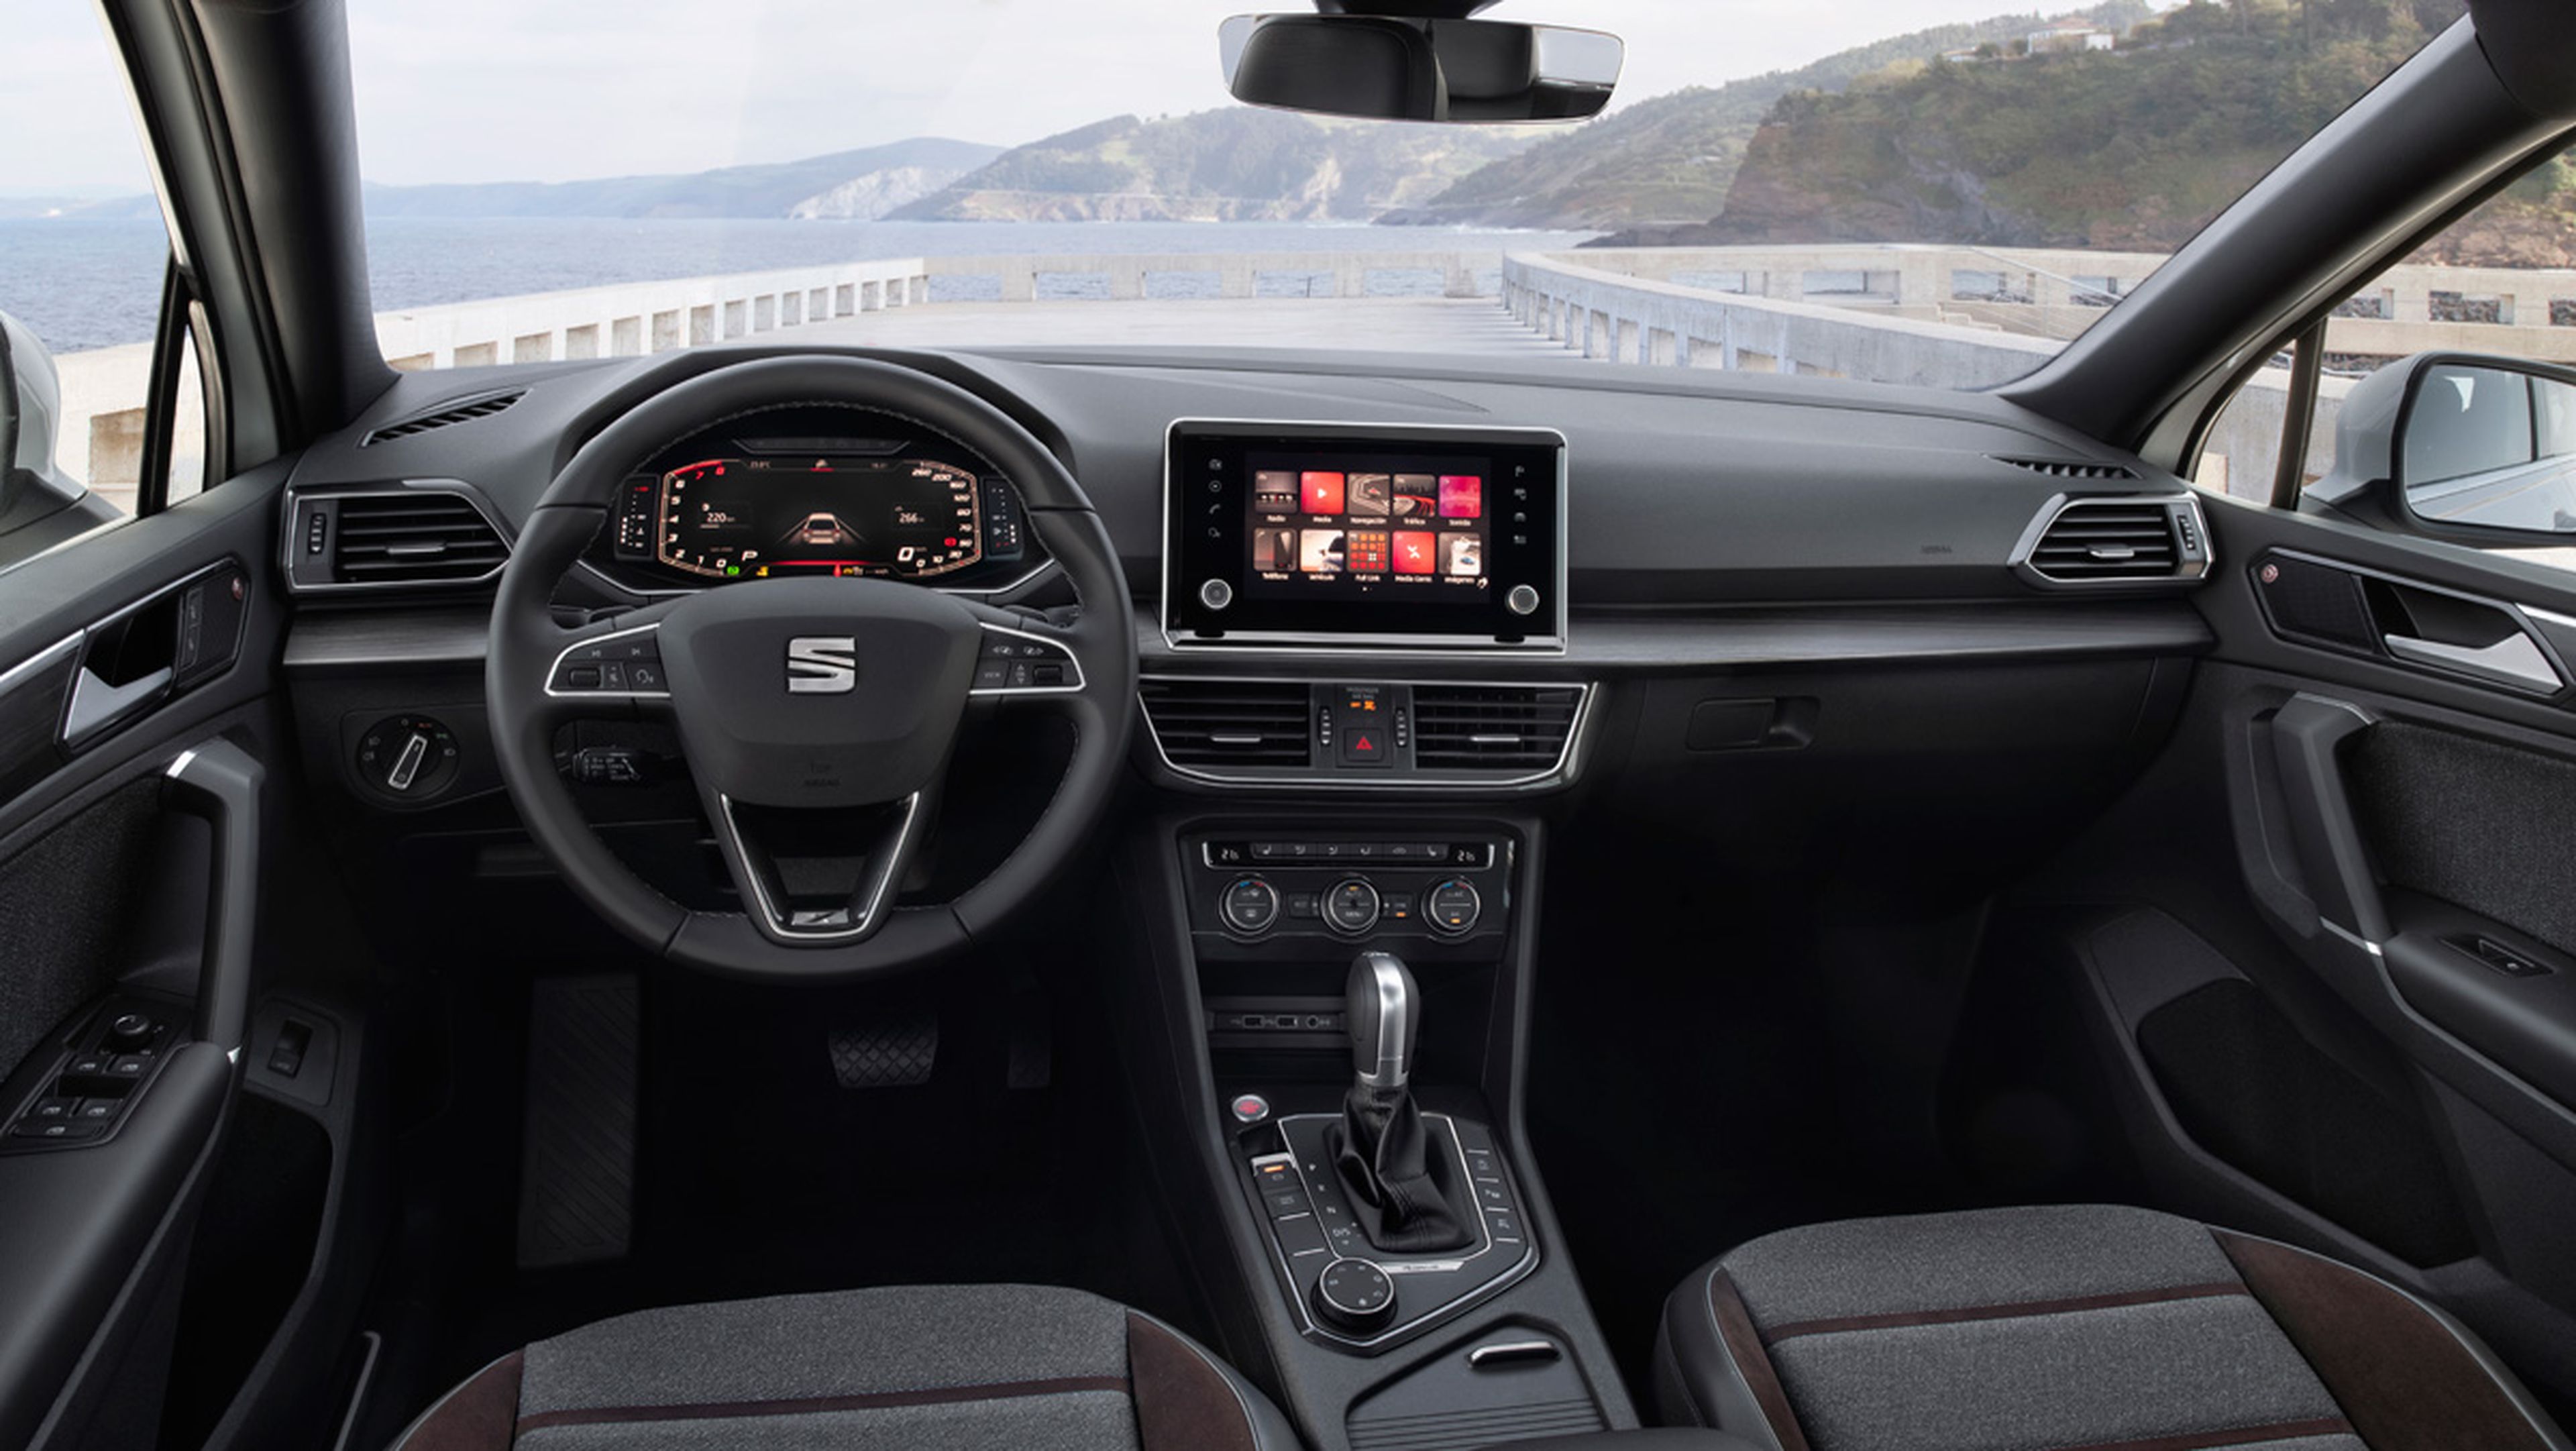 Prueba Seat Tarraco 2.0 TSI 190 CV (interior)